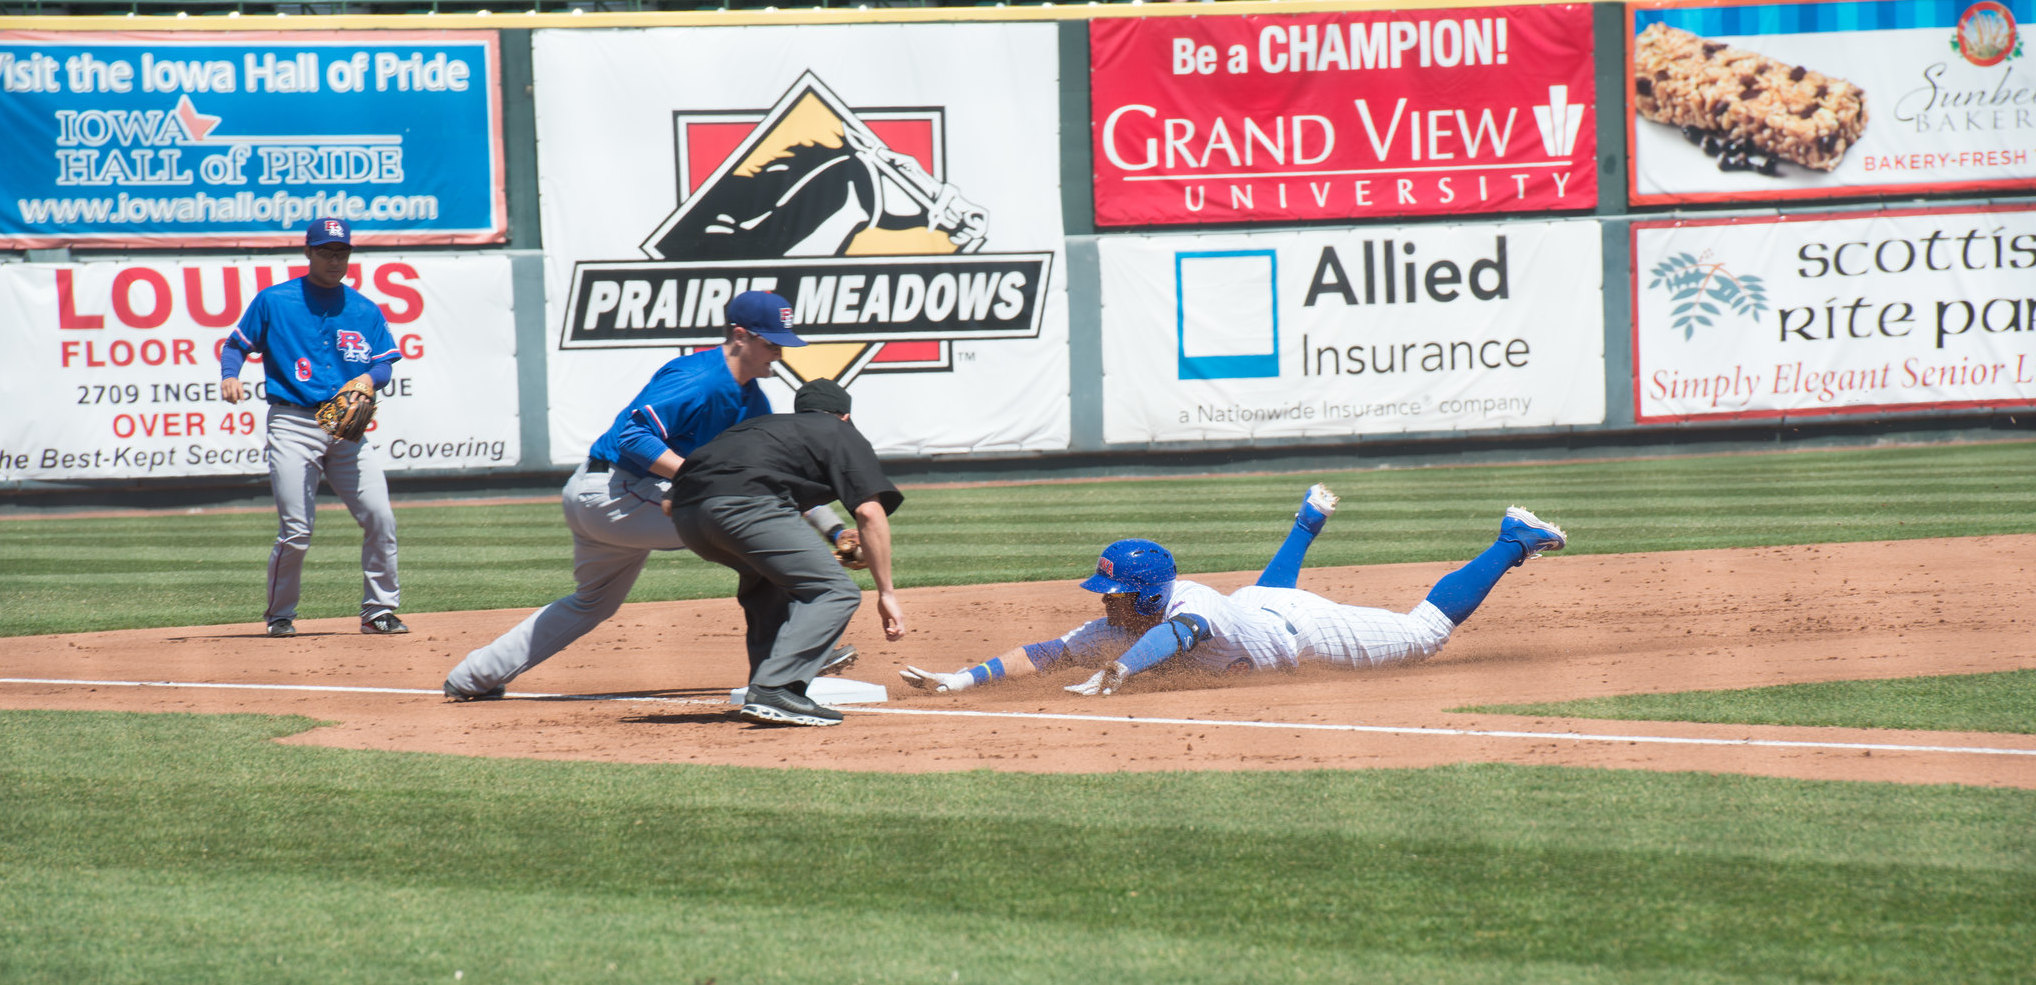 An Iowa Cubs player slides into third base